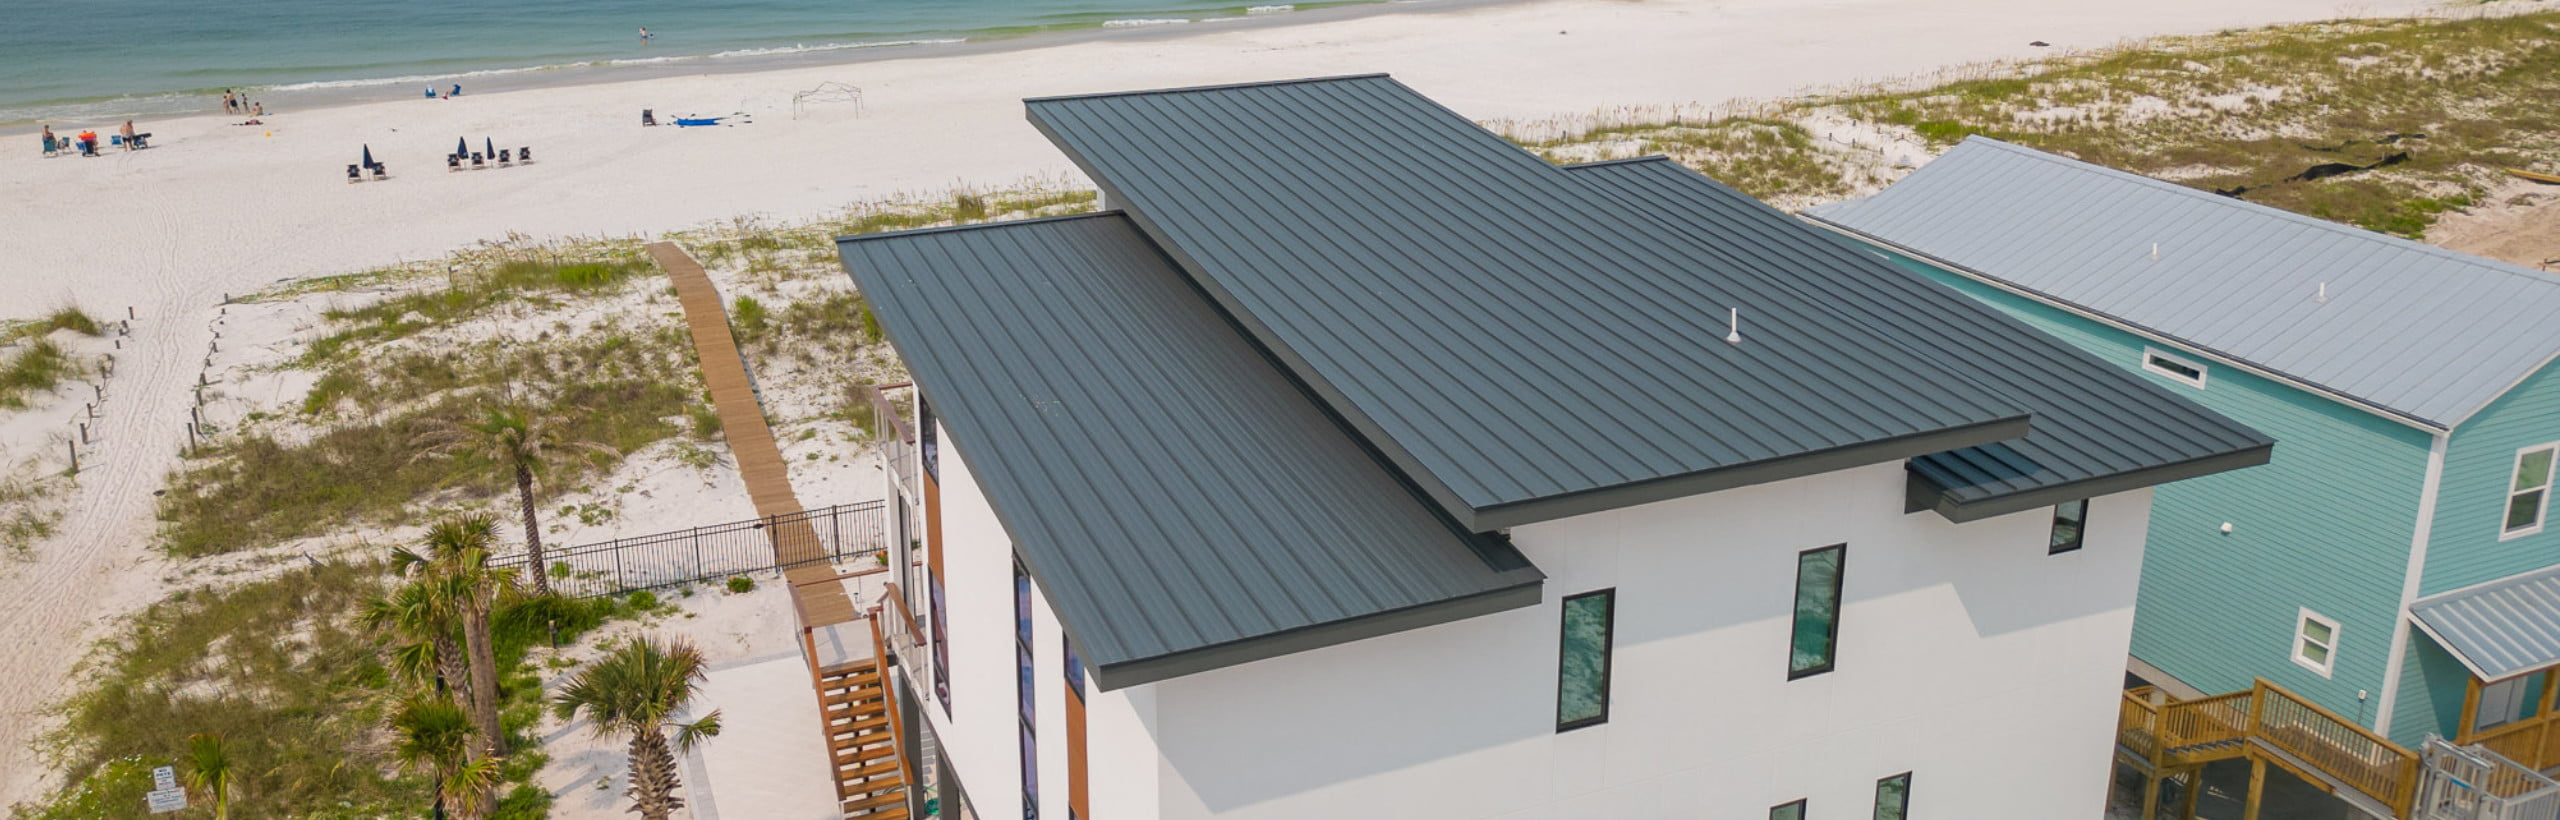 Hall Roofing Company - Cape San Blas - Port St Joe - Mexico Beach - Slide 2